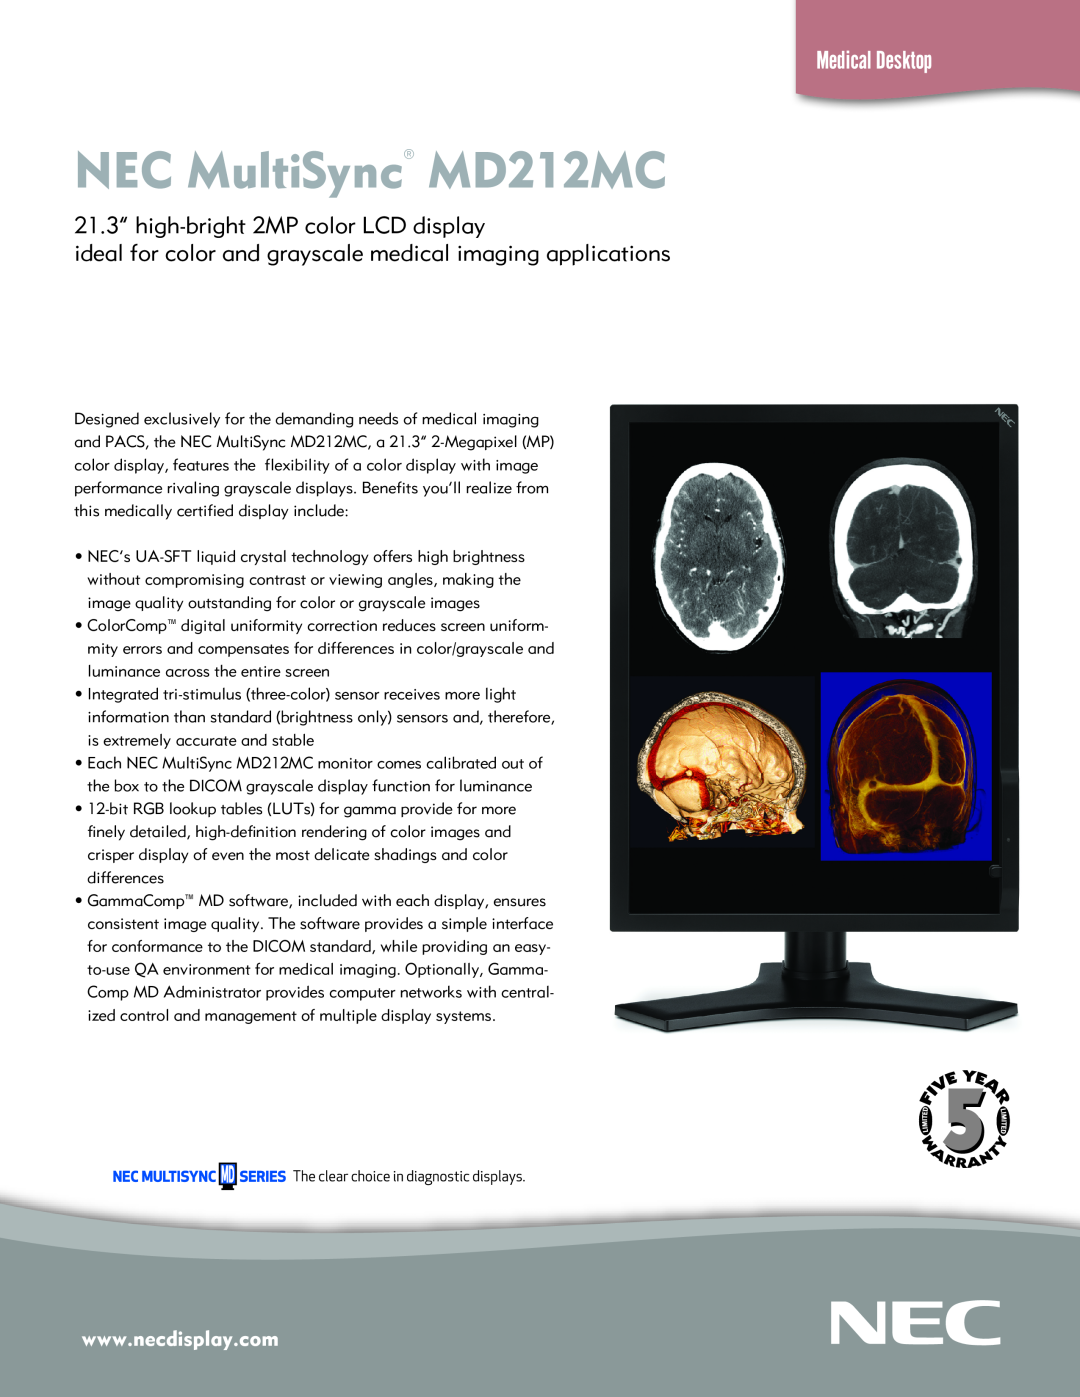 NEC manual NEC MultiSync MD212MC, Medical Desktop, 21.3” high-bright2MP color LCD display 